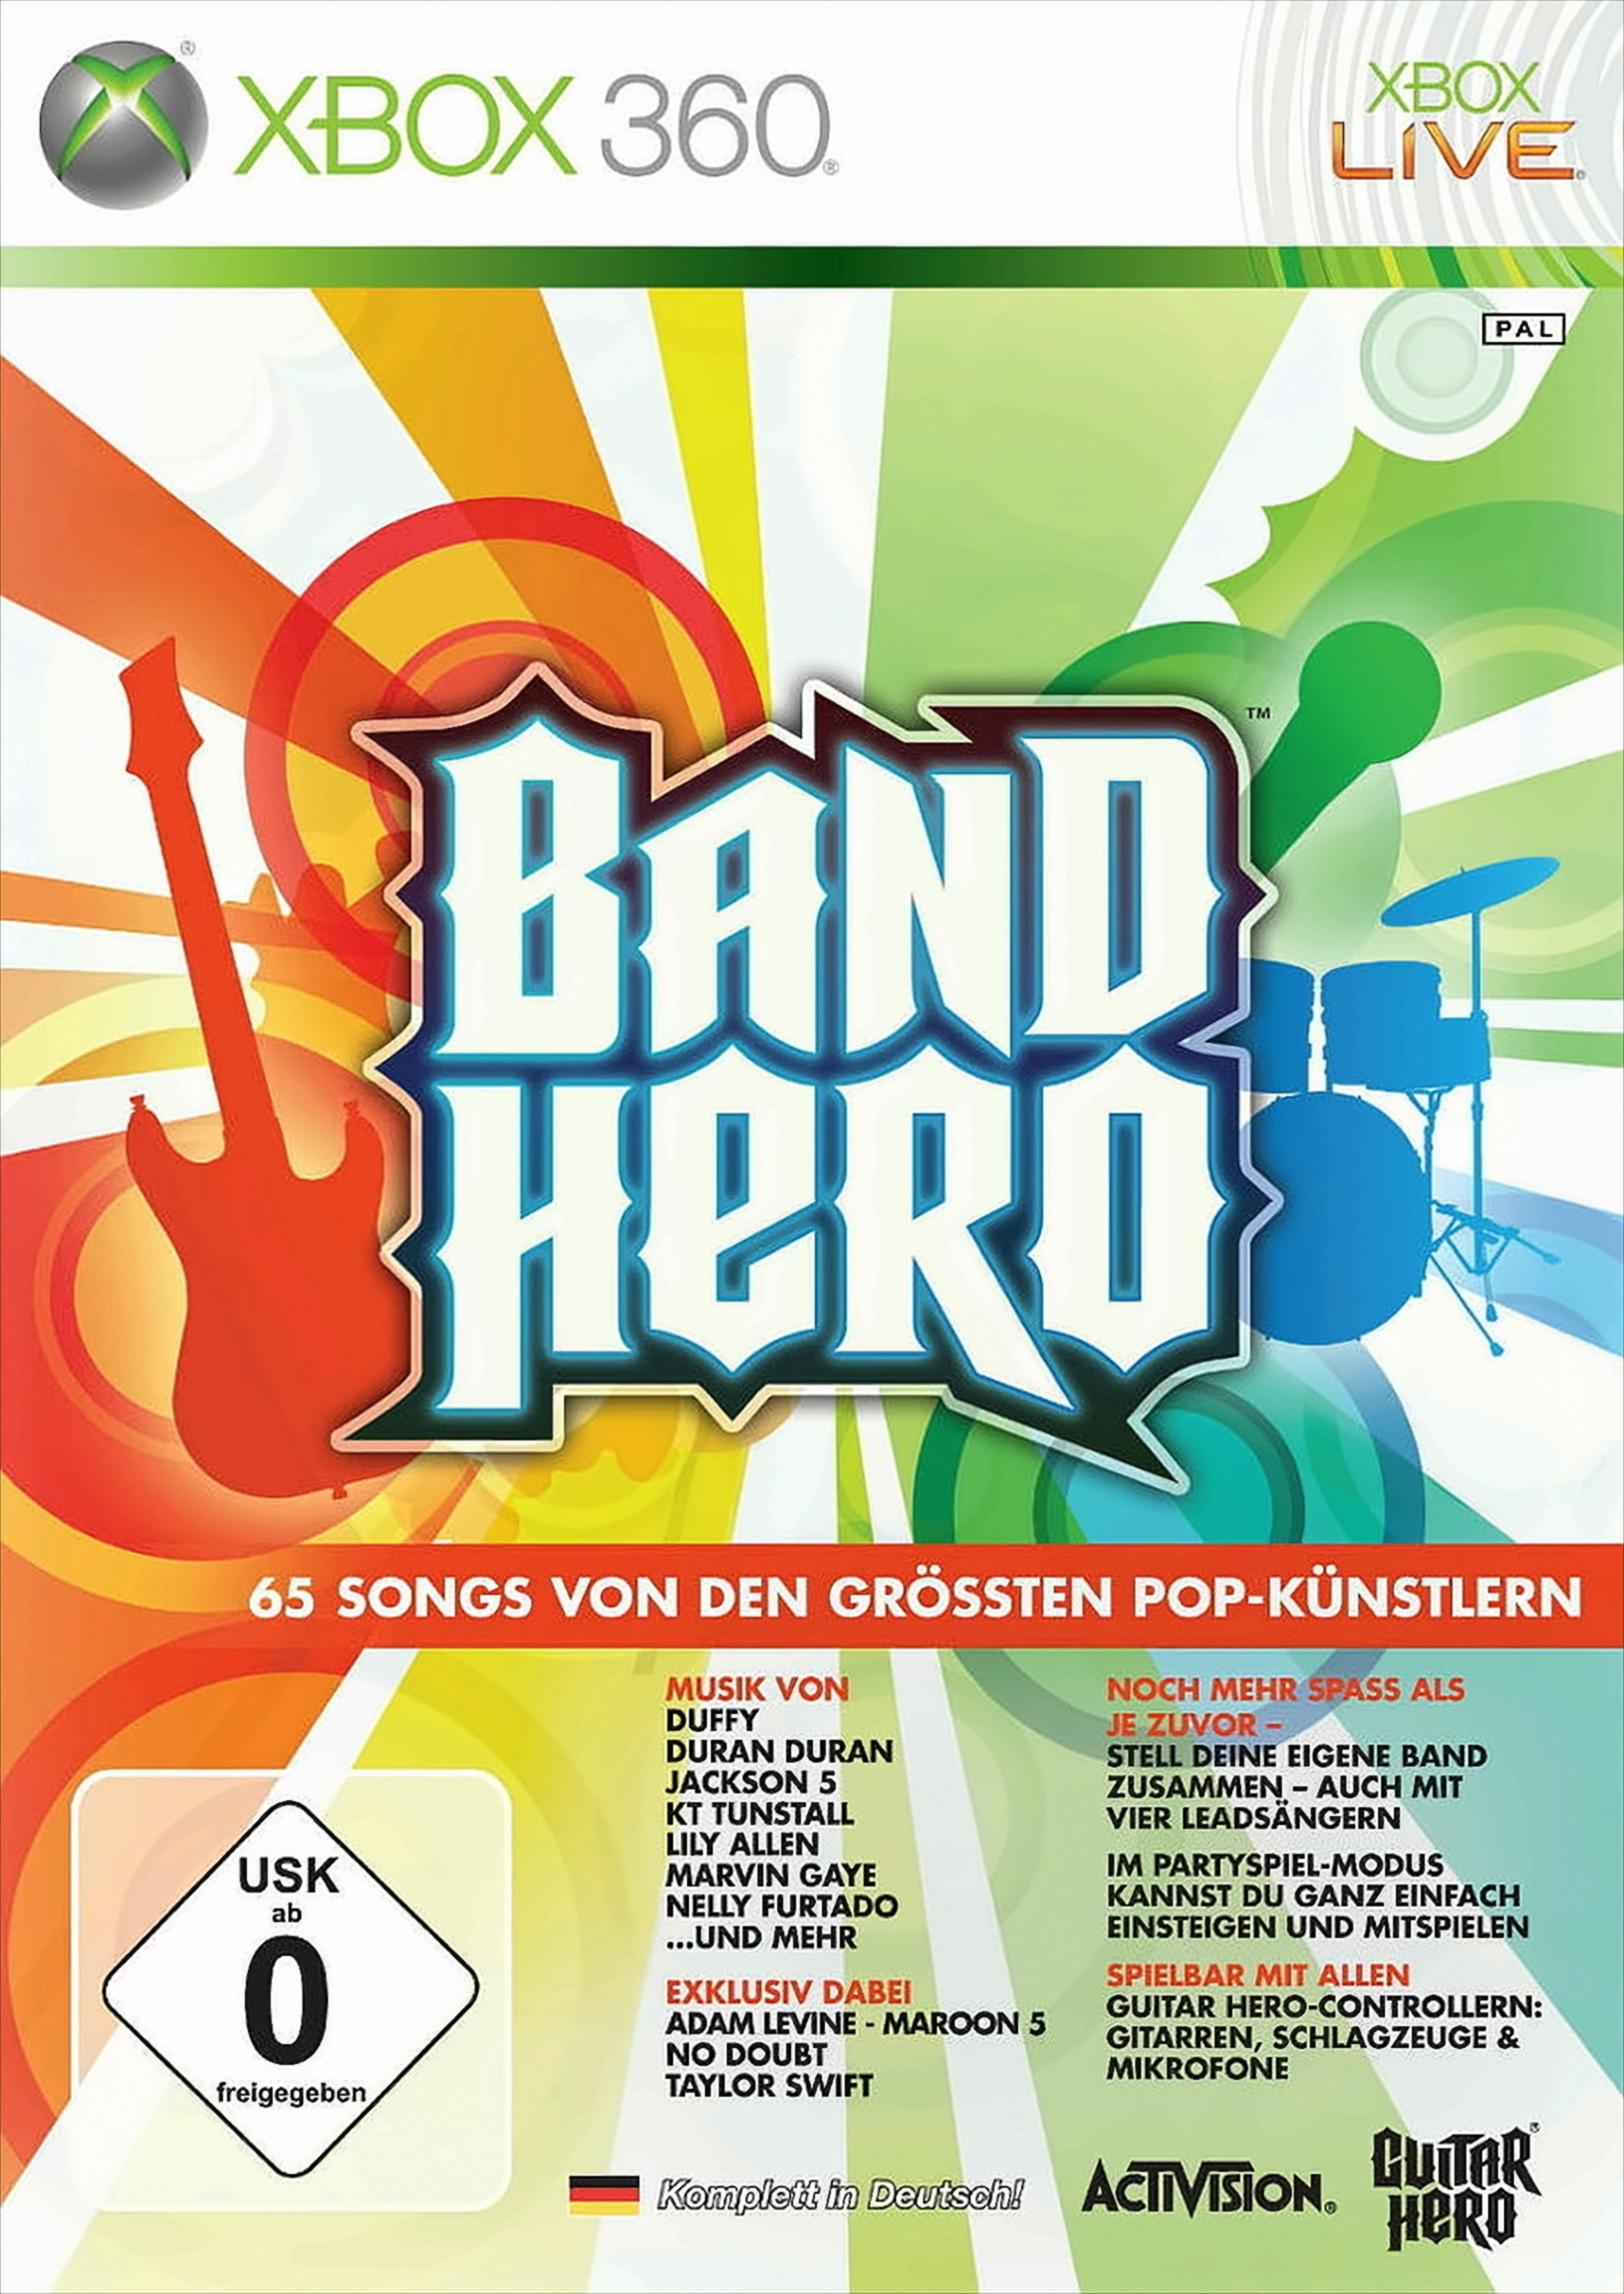 Band Hero [Xbox 360] -